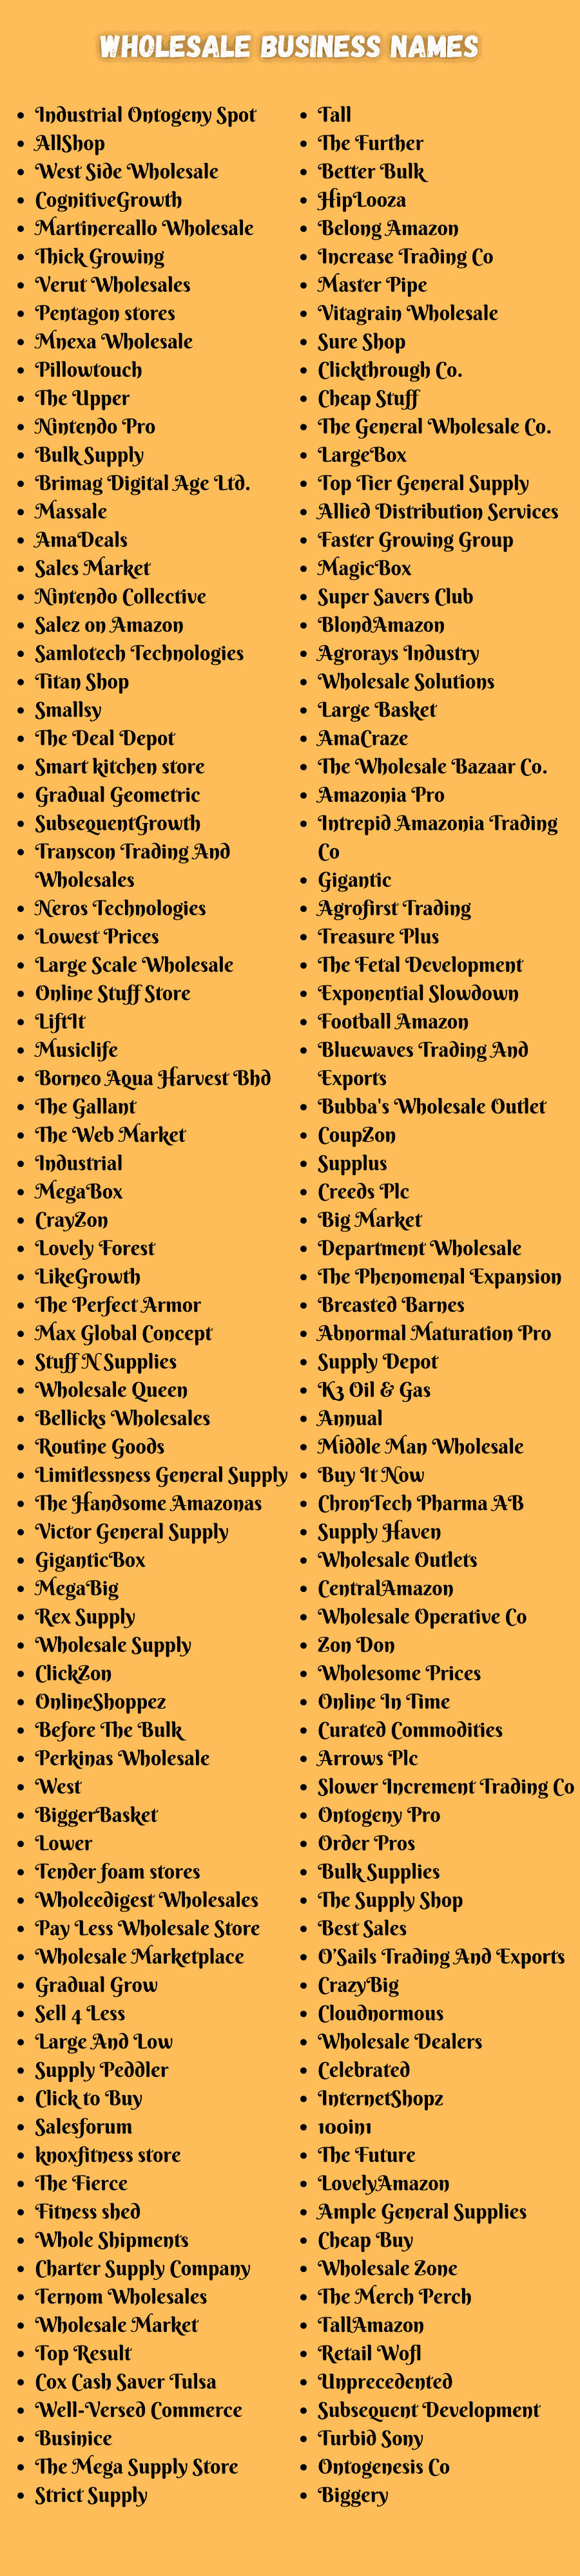 Wholesale Business Names